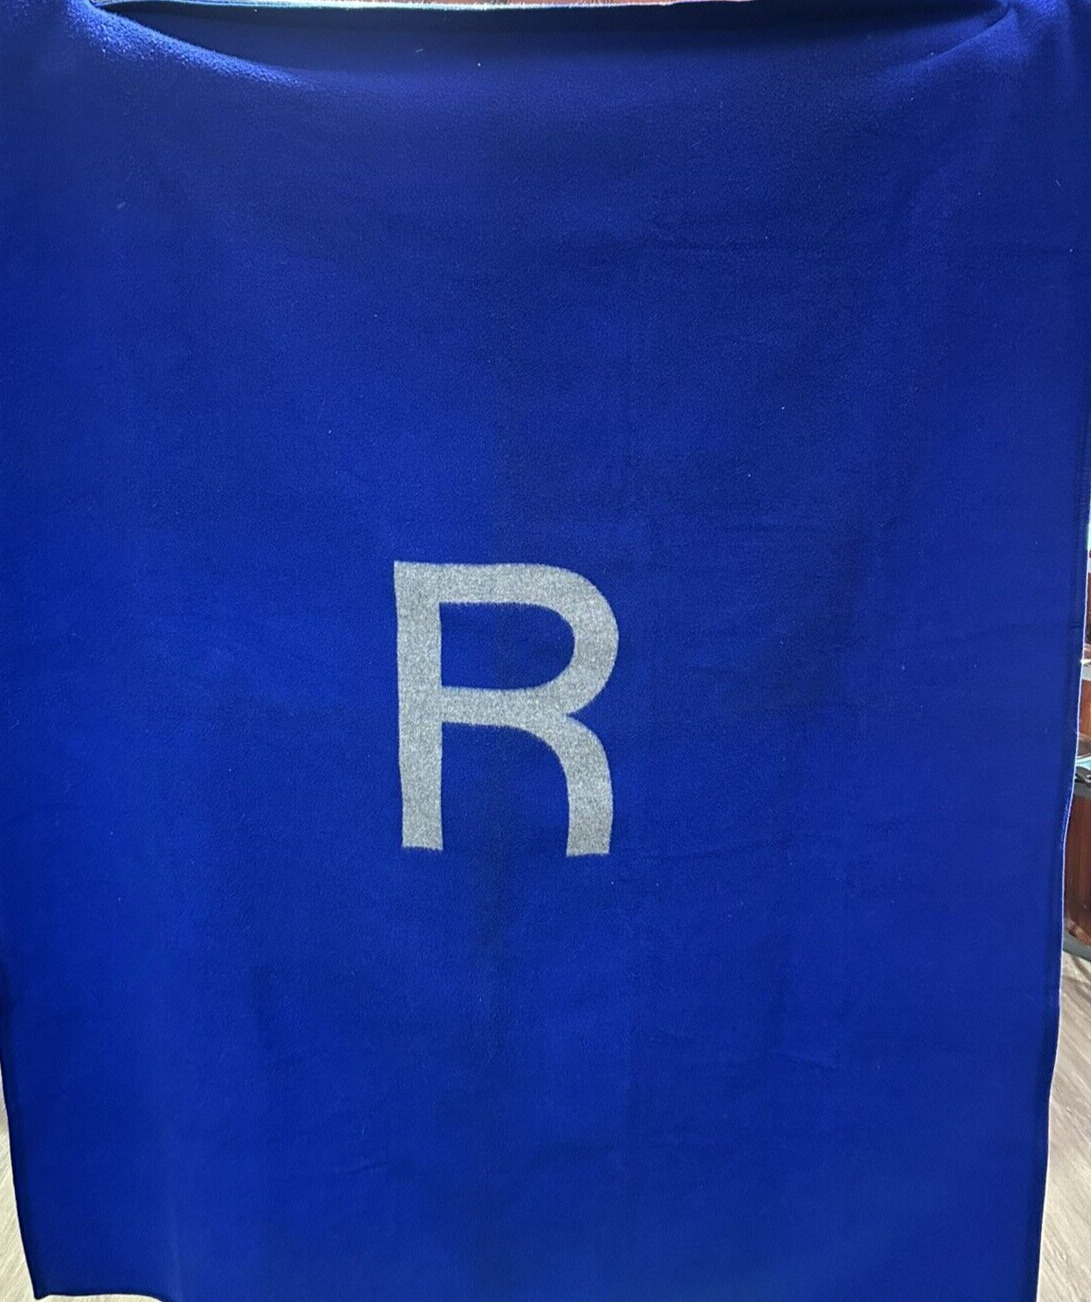 Pendleton Wollen Mills Blanket Blue/Grey Personalized Letter R (Rice University)